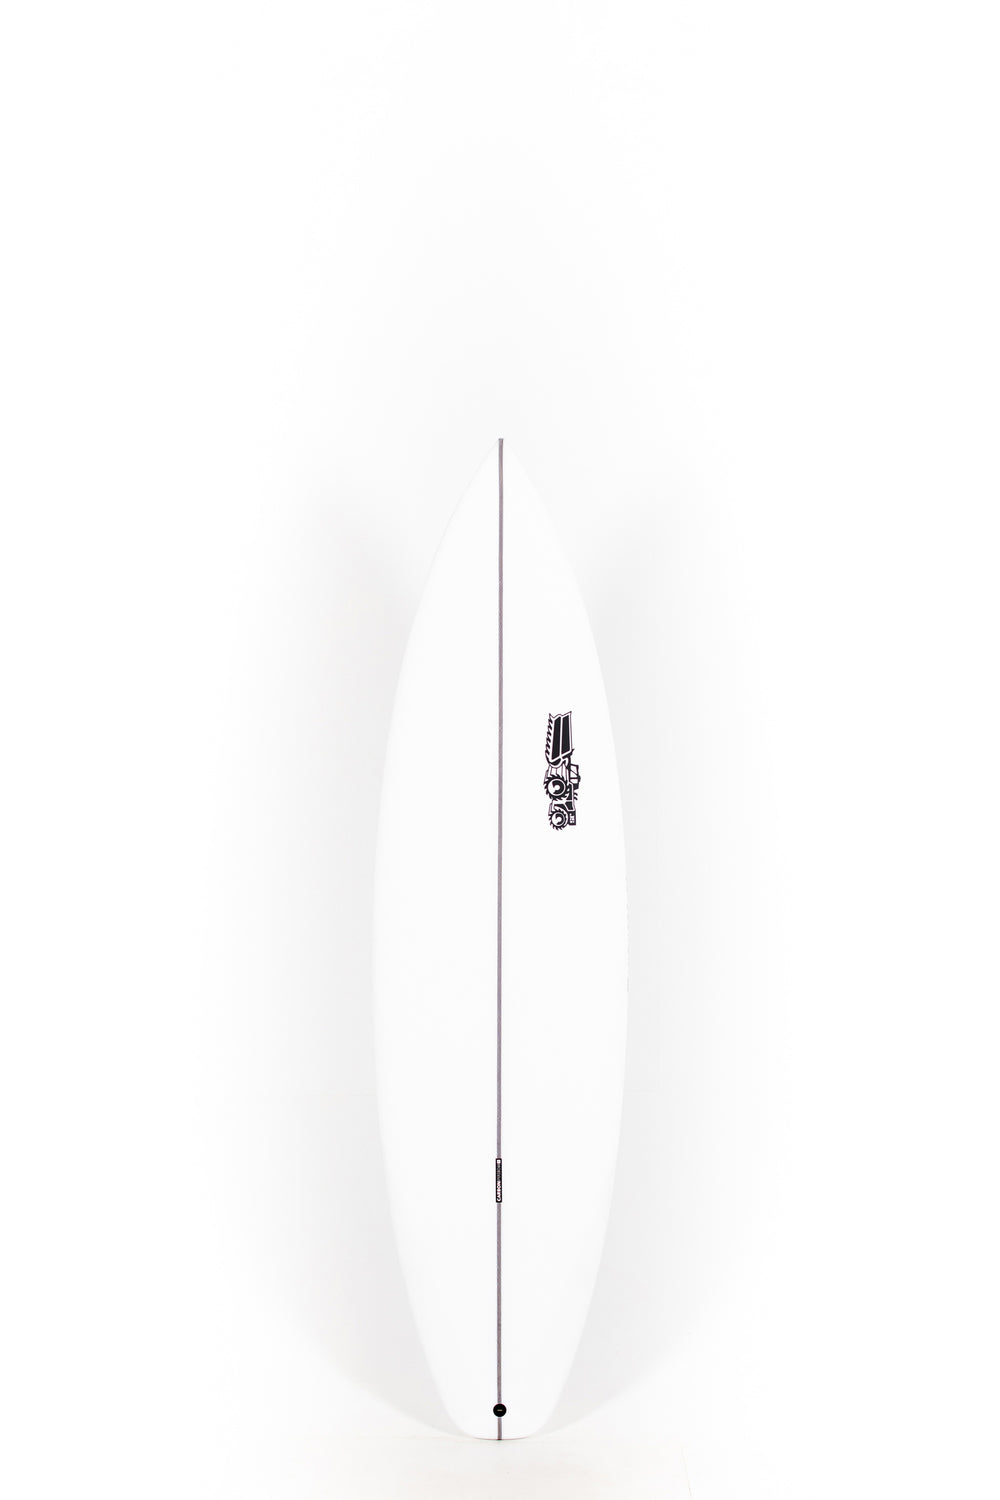 Pukas Surf Shop - JS Surfboards - MONSTA 2020 - 6'3